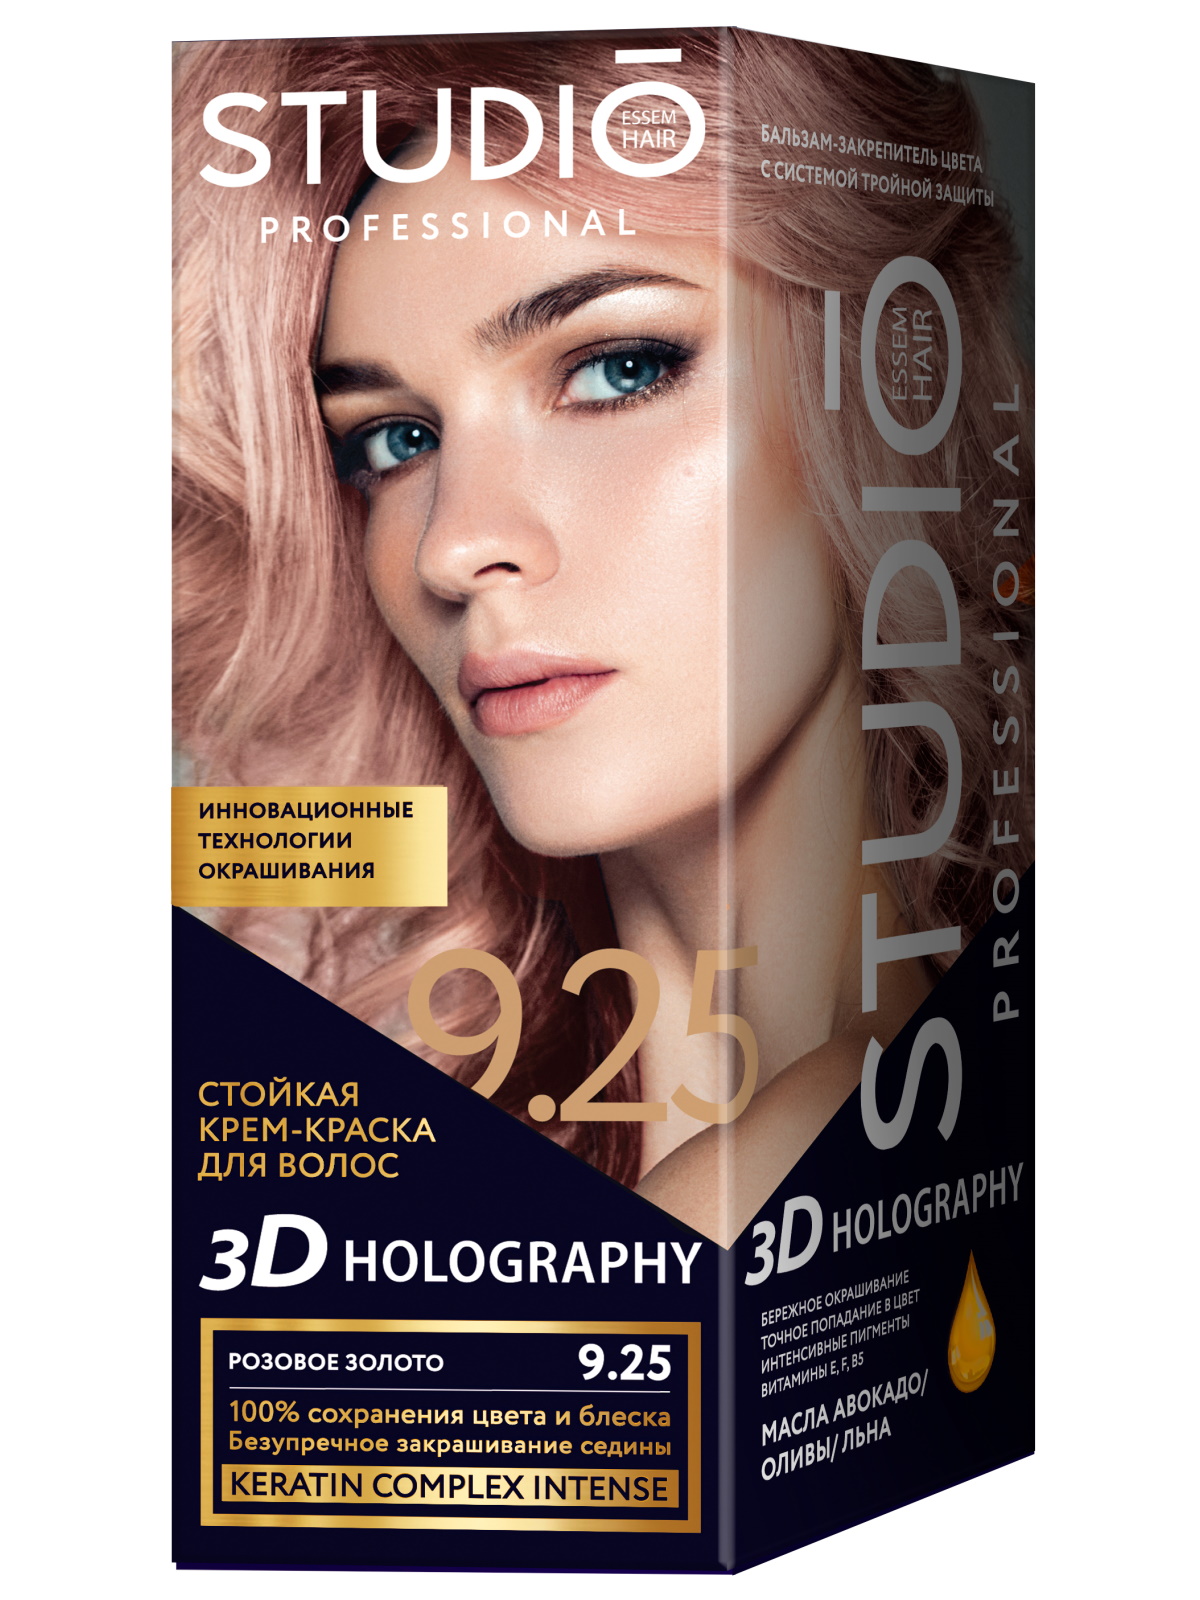 Комплект 3D HOLOGRAPHY для окрашивания STUDIO PROFESSIONAL 9.25 розовое золото 2*50+15 мл